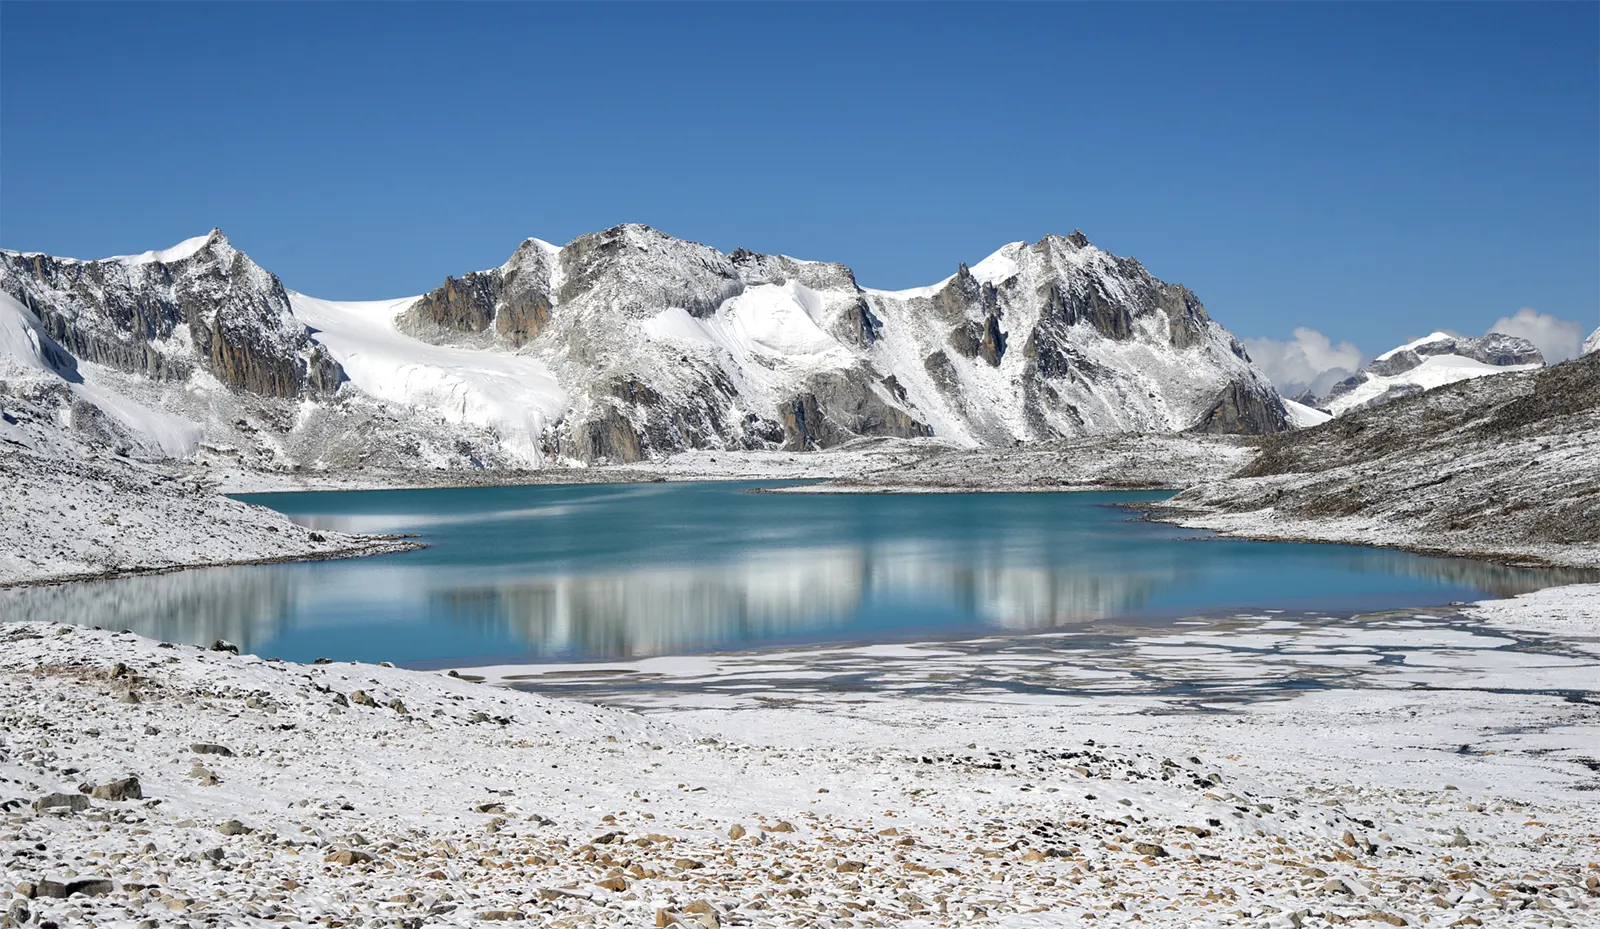 Tshorim Lake - Bhutan ranked as the world's second best destination in 2023